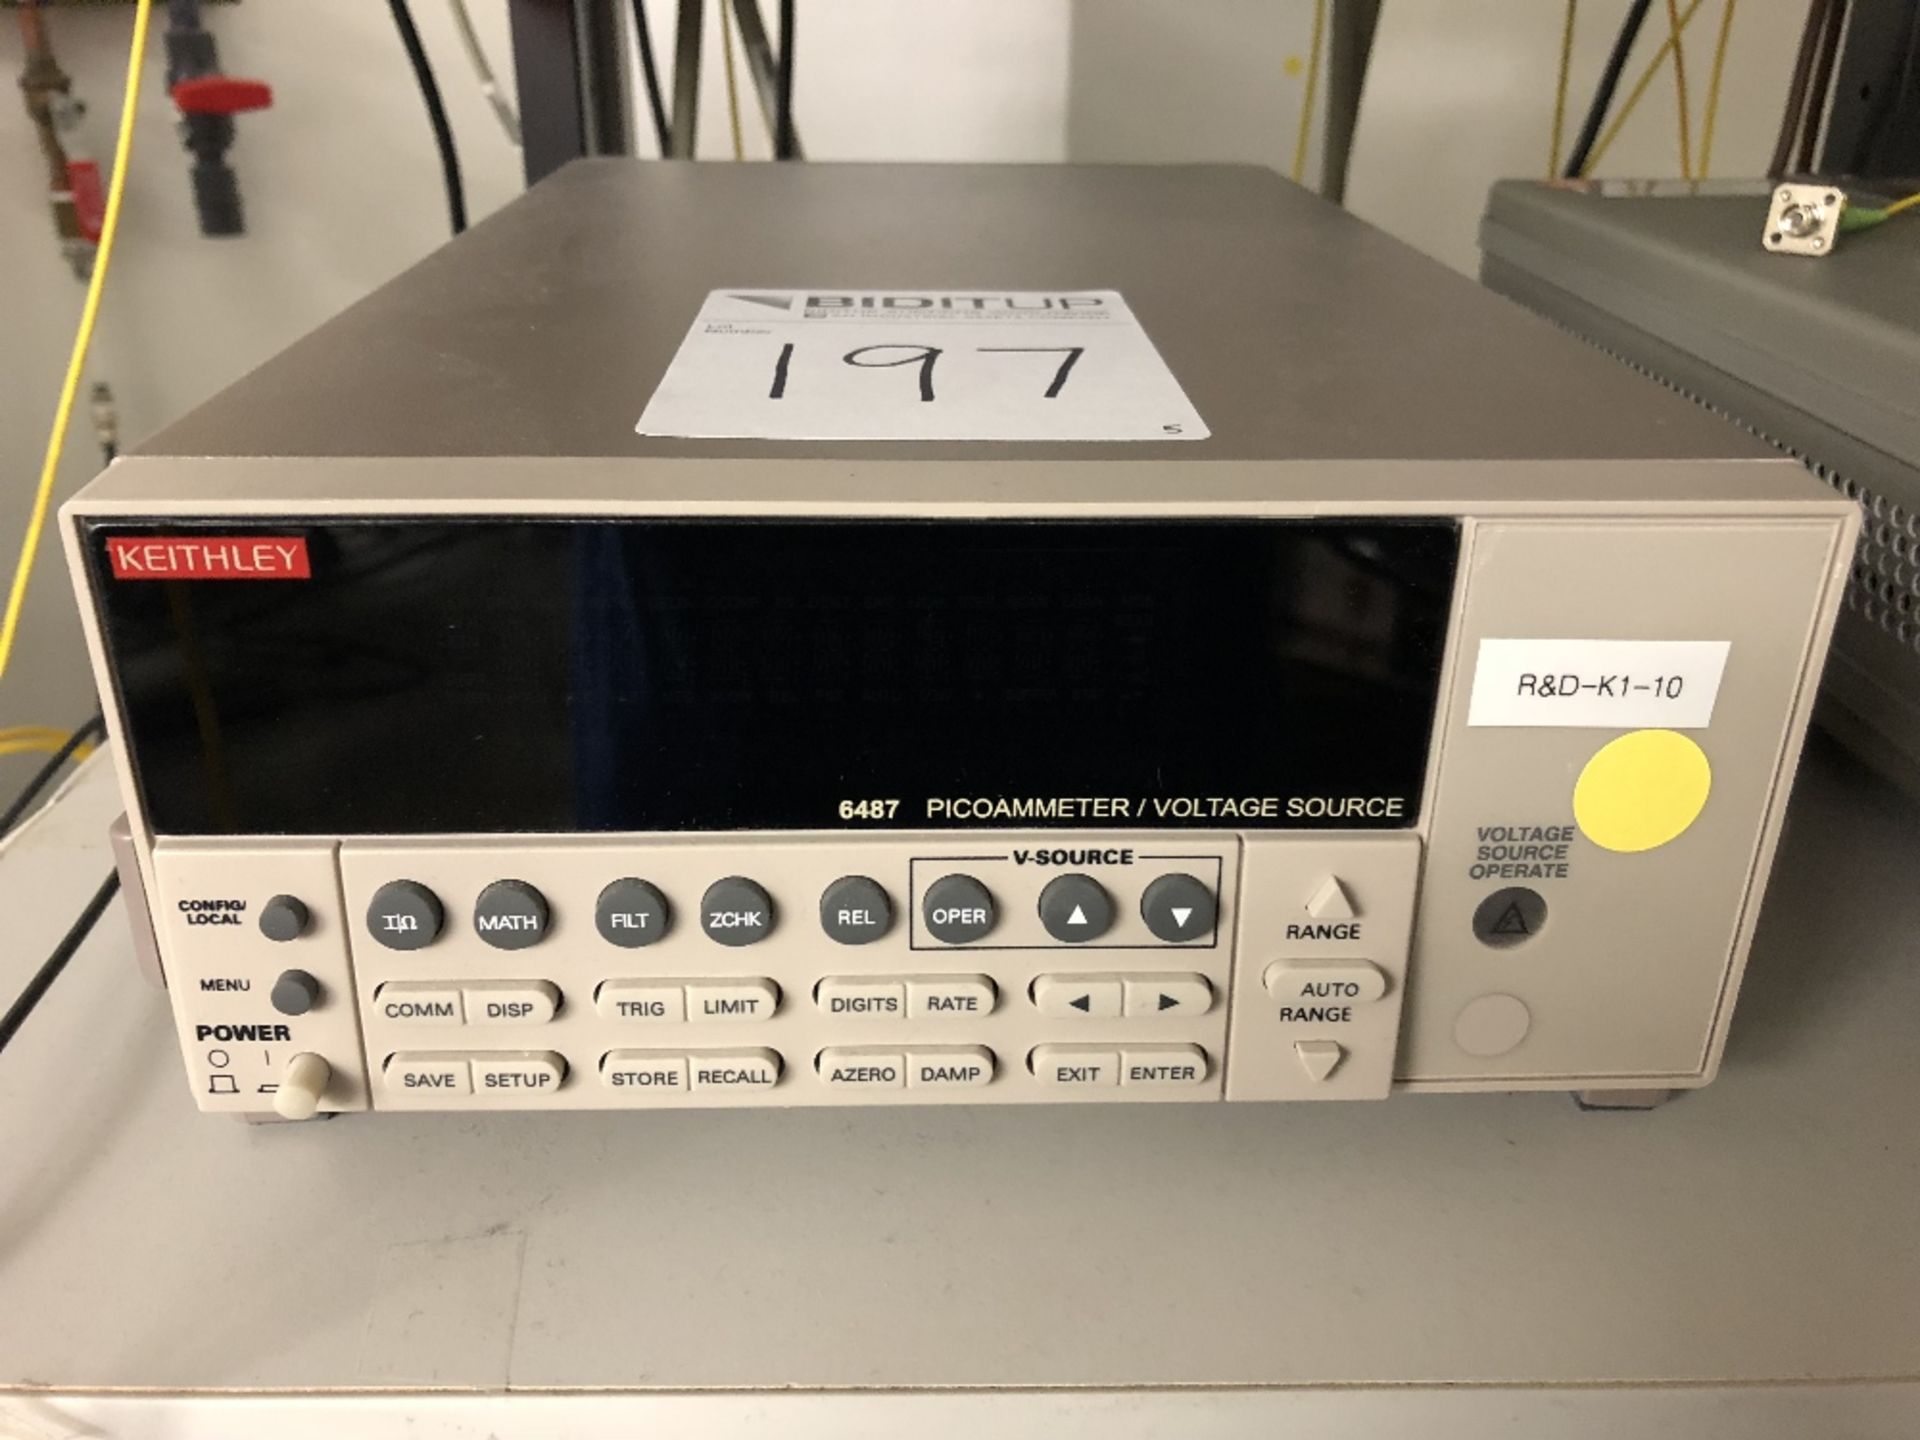 Keithley 6487 Picoammeter / Voltage Source